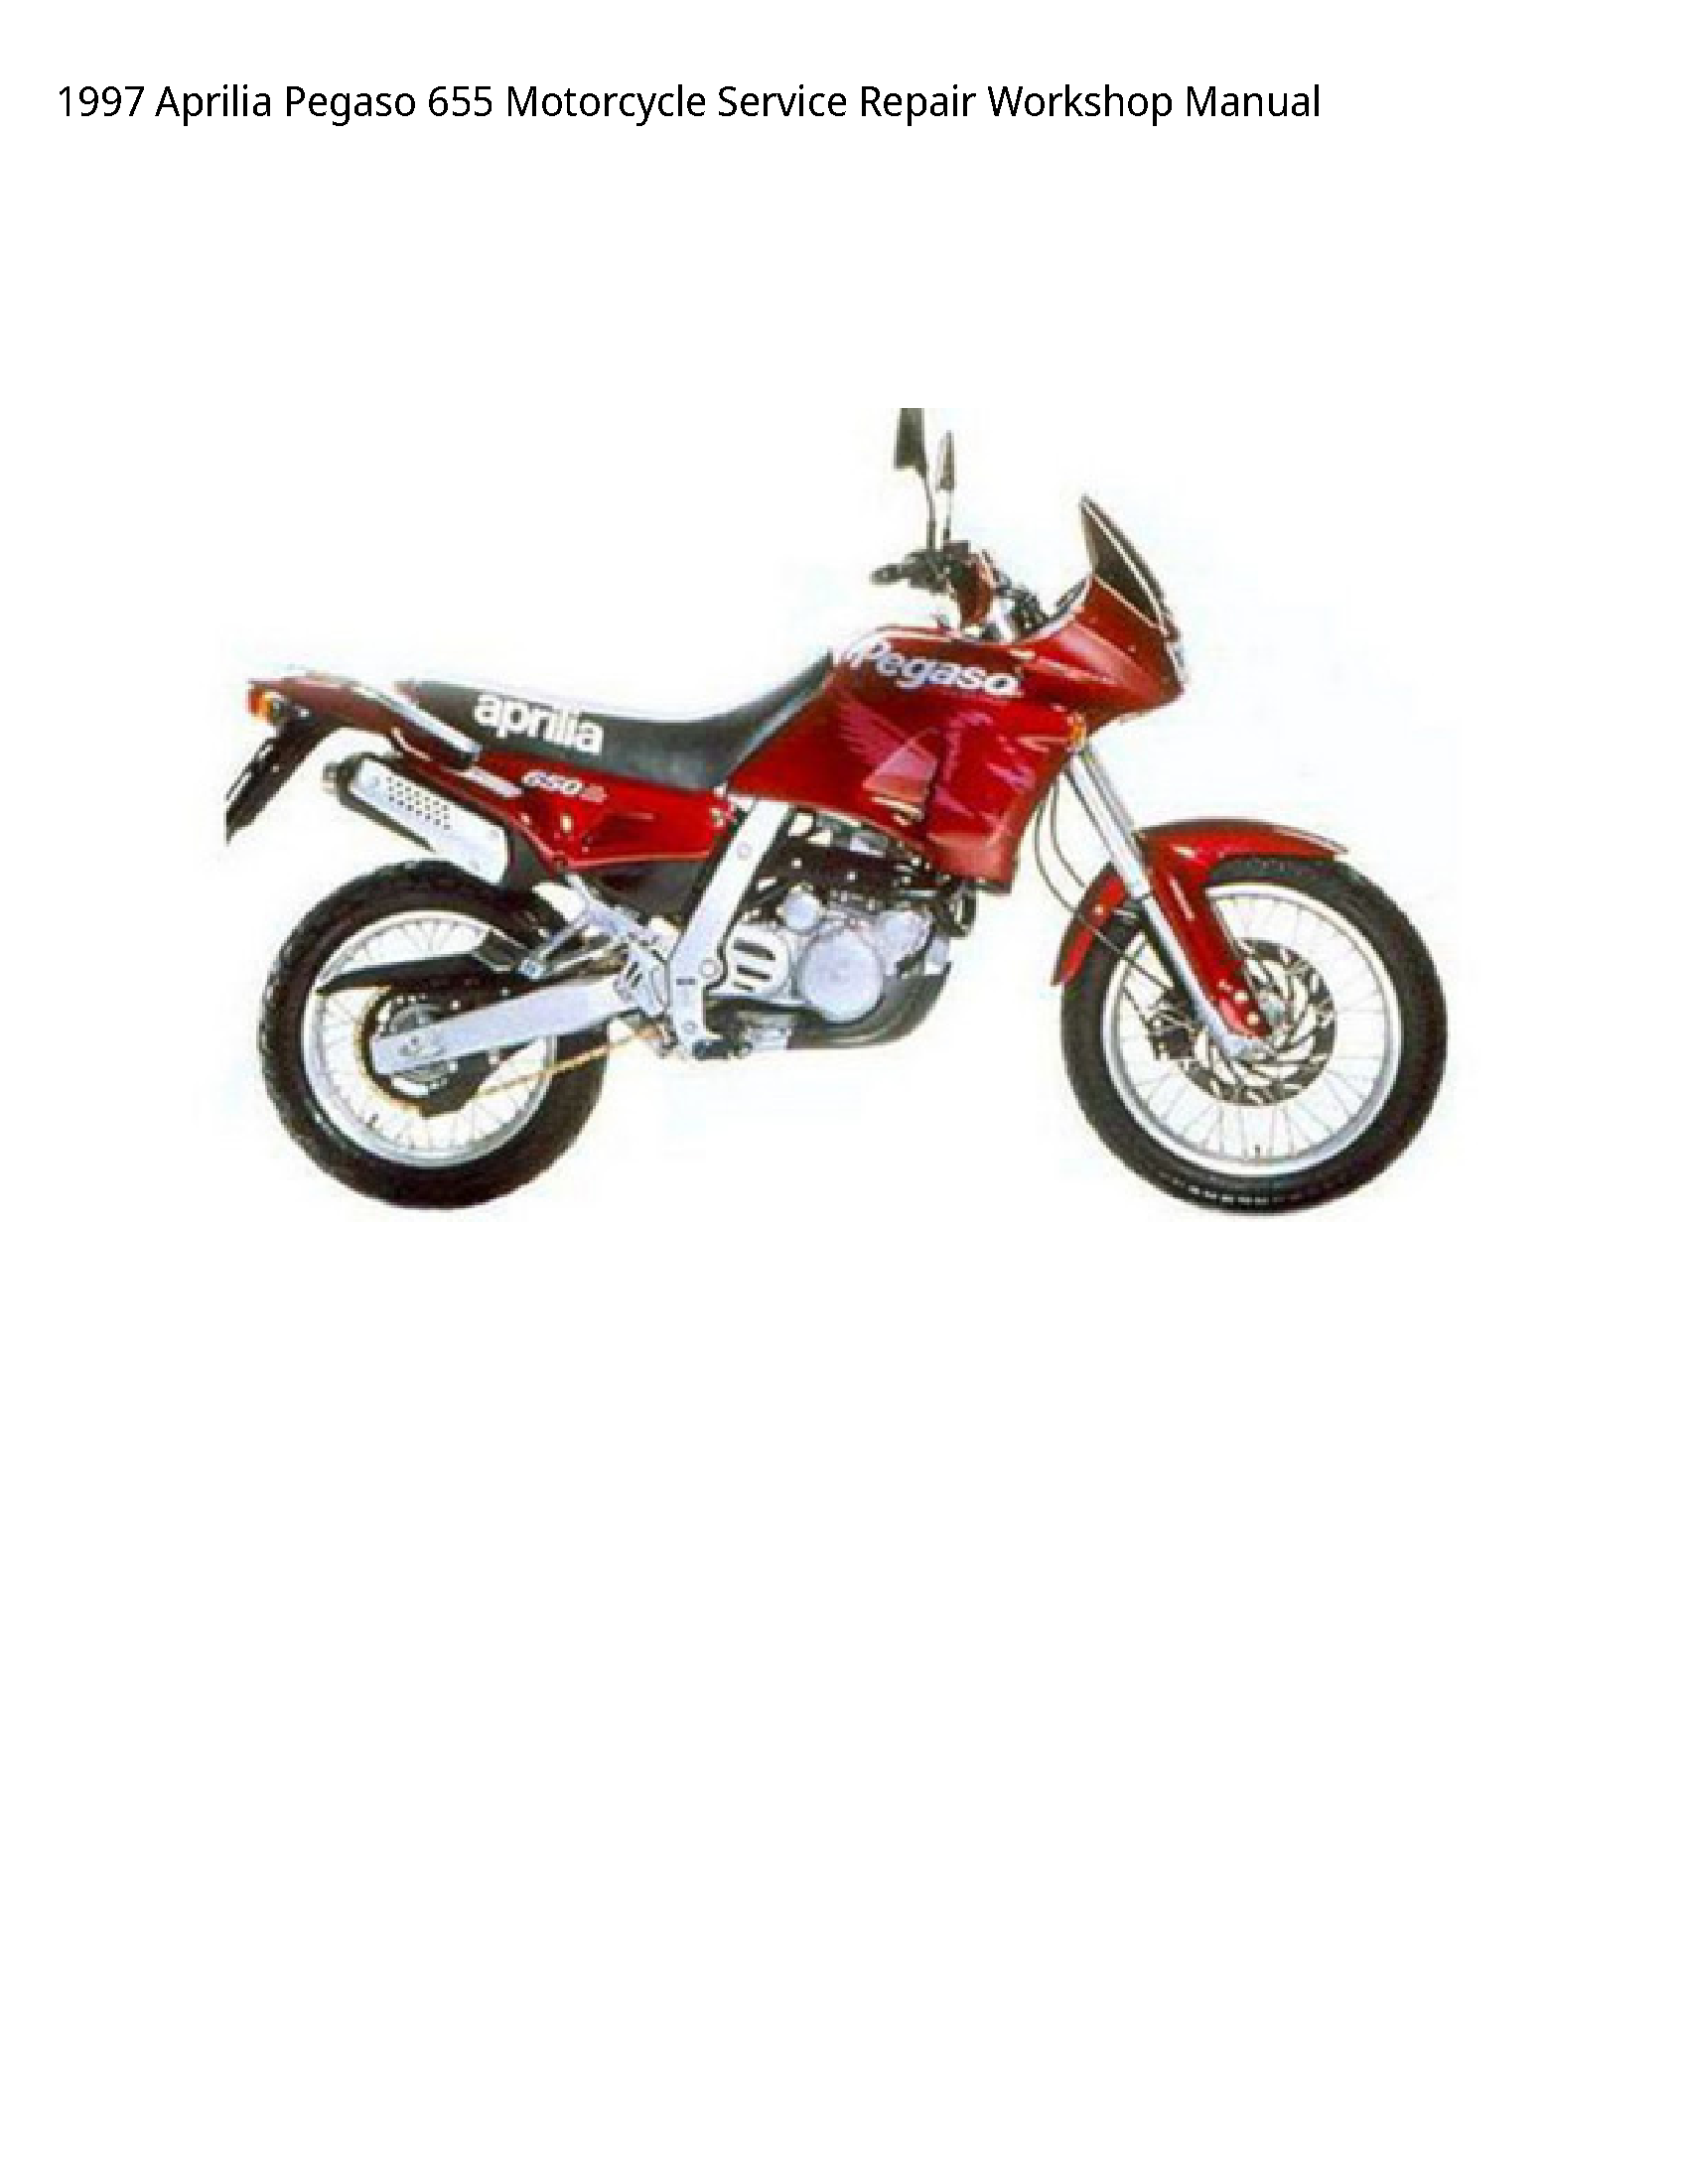 Aprilia 655 Pegaso Motorcycle manual